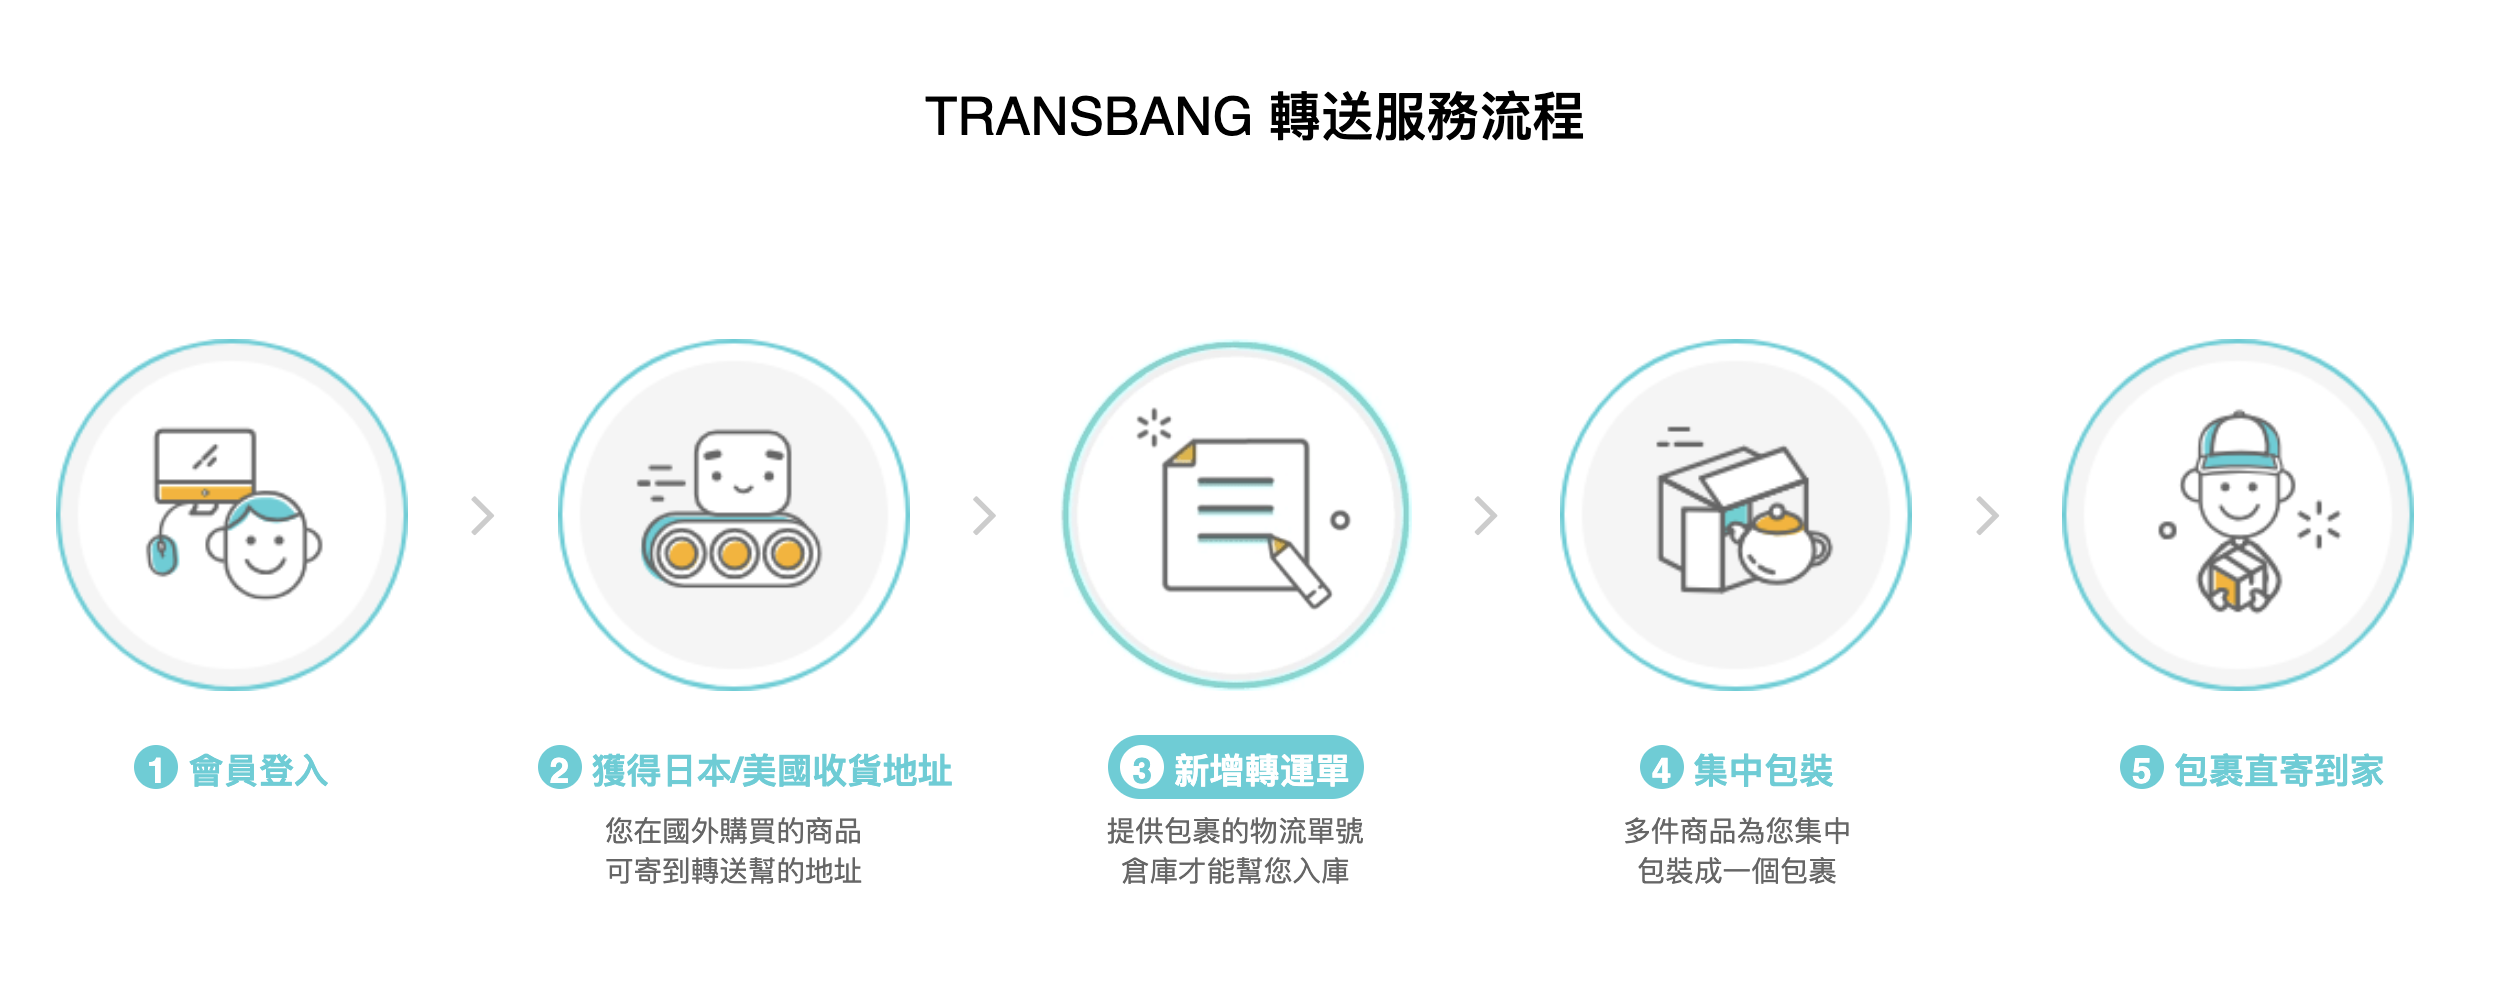 TRANSBANG 轉送幫服務流程